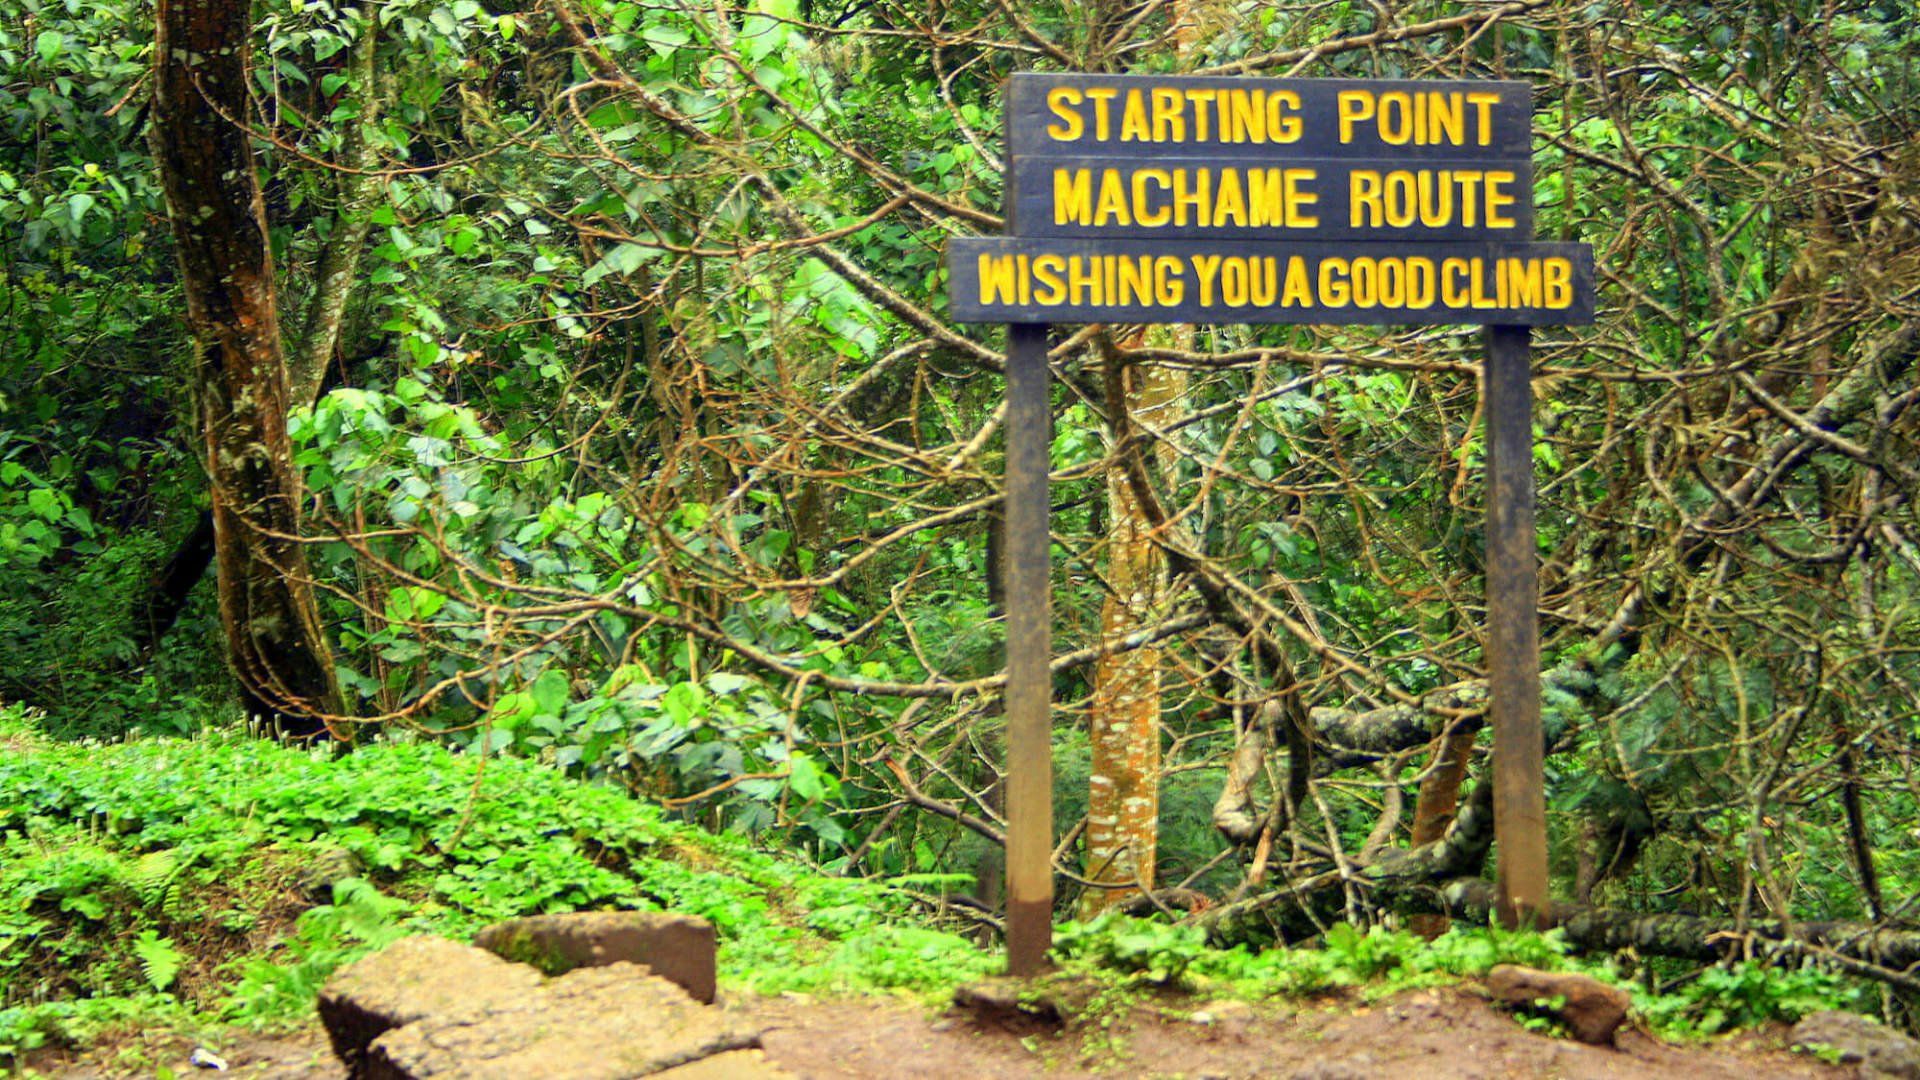 Starting Point Machame Route Kilimanjaro - eXplore Plus Travel and Tours